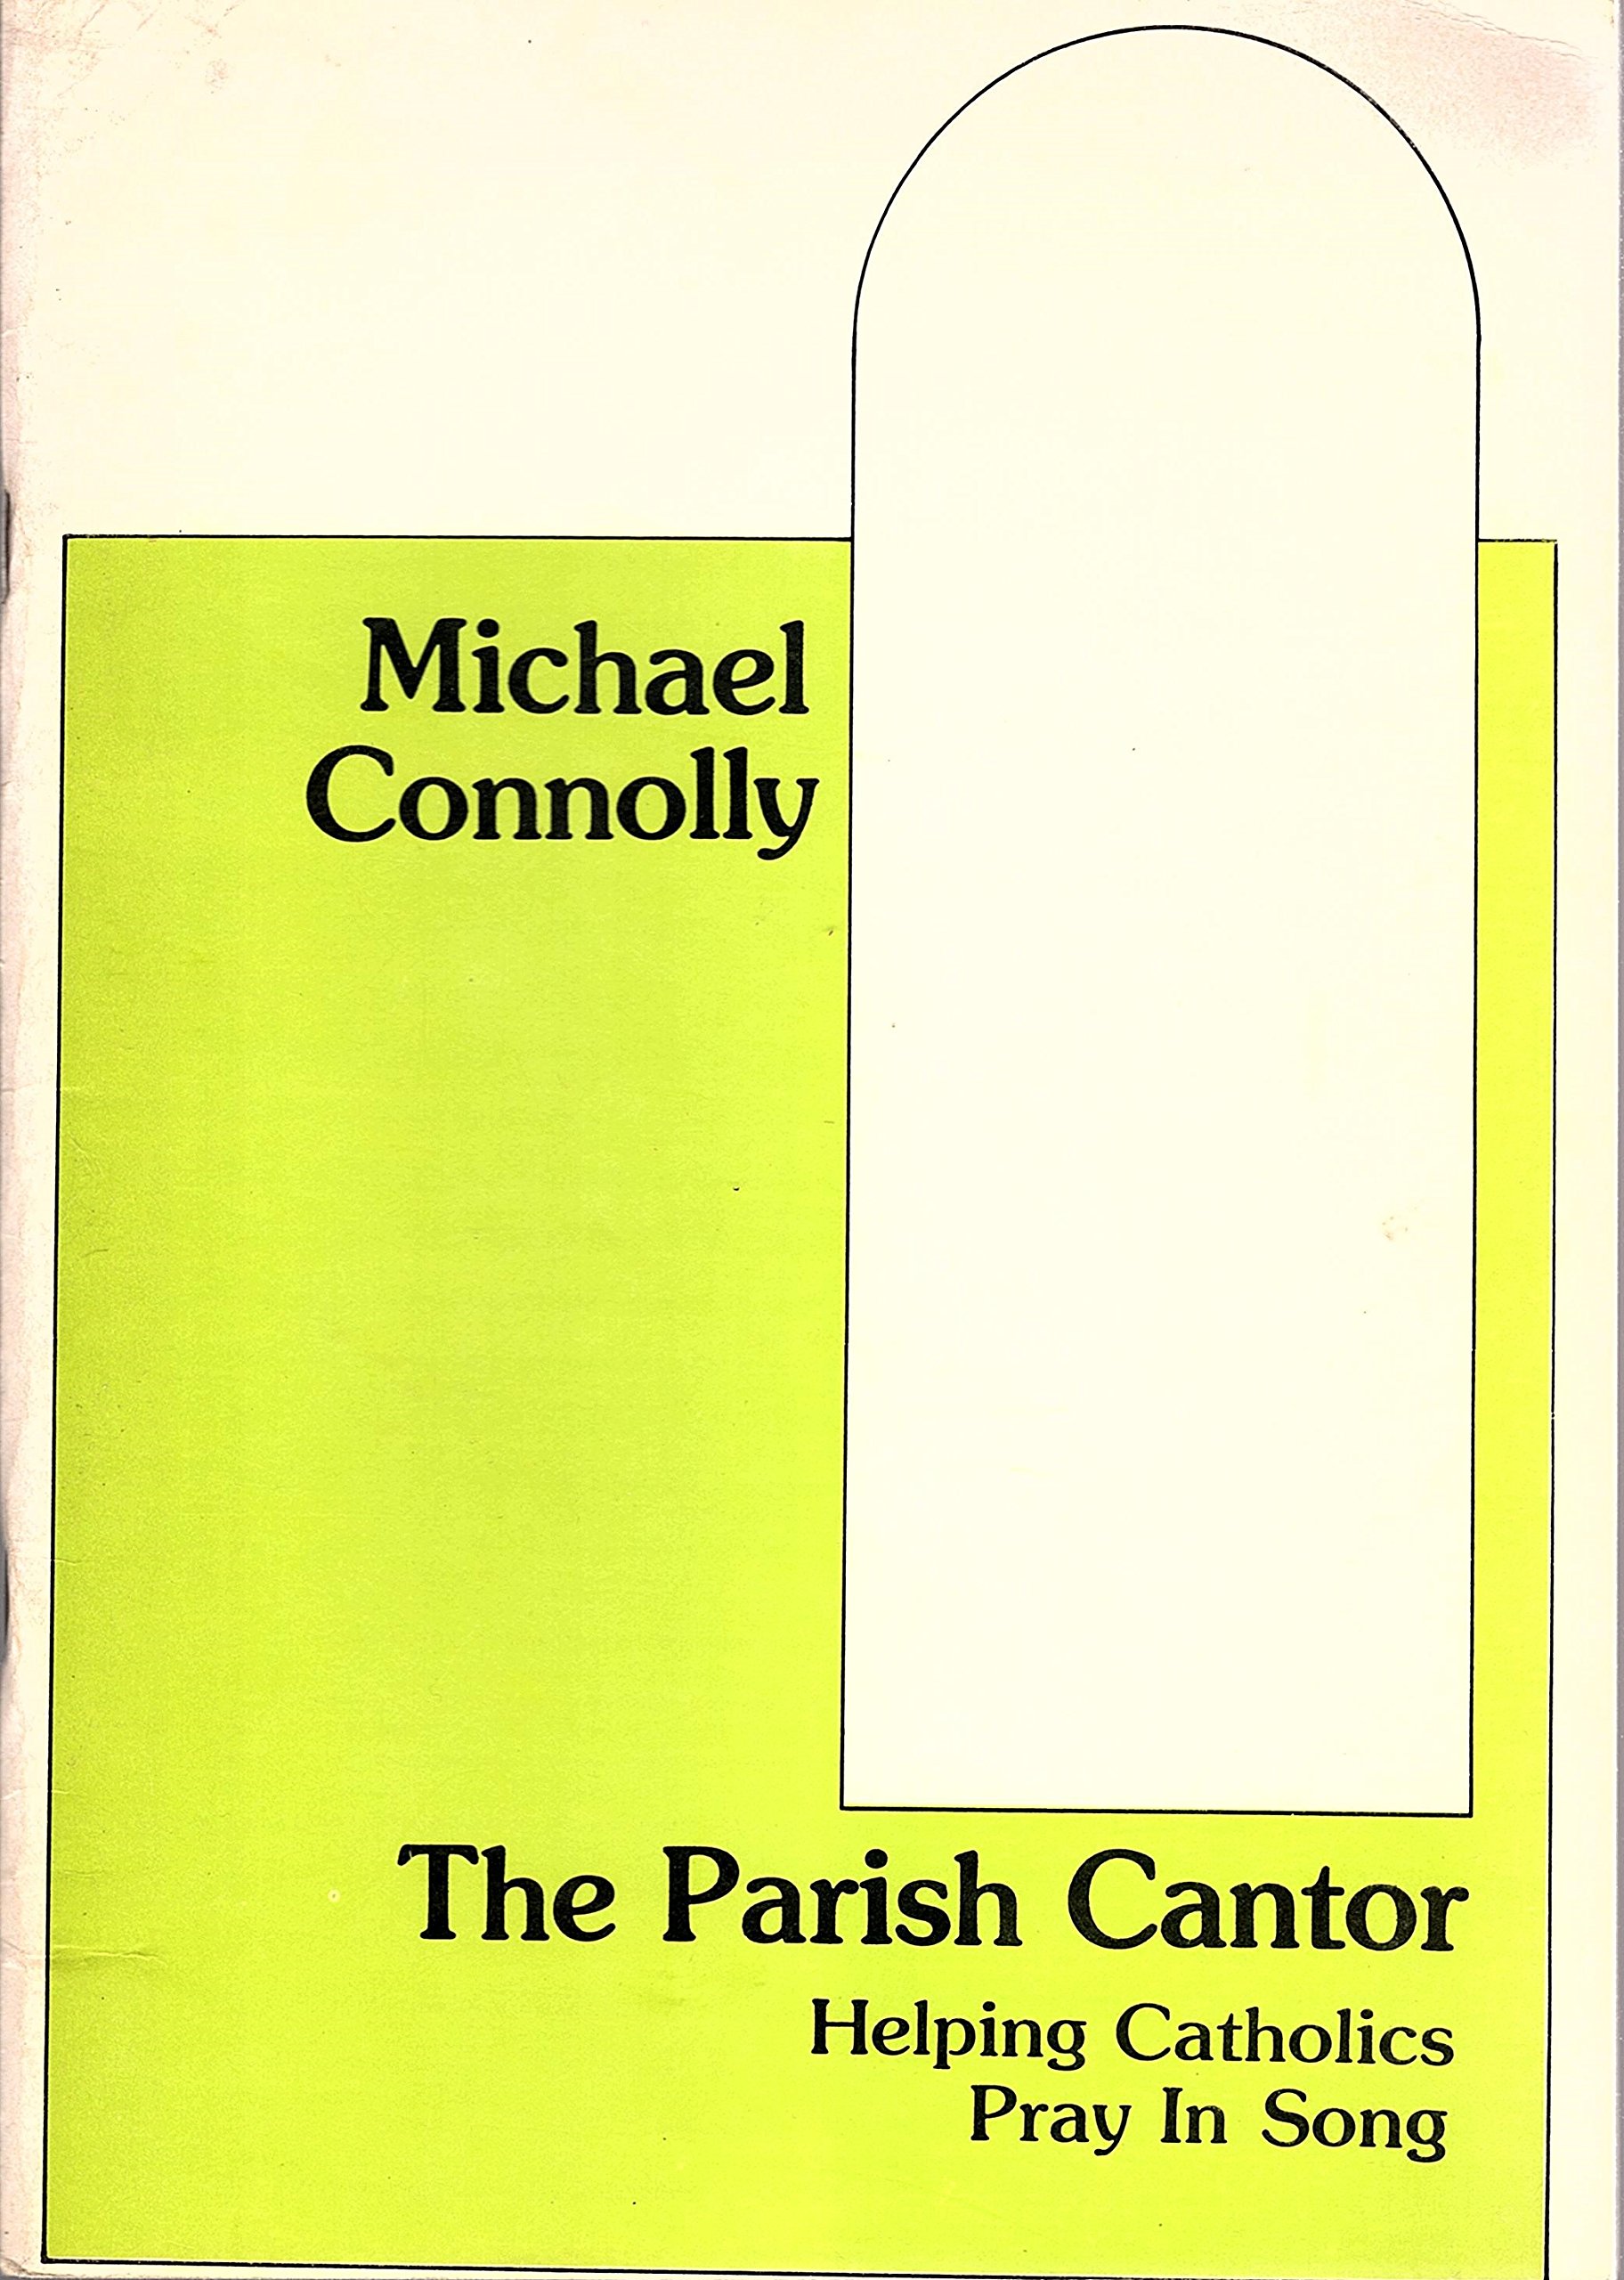 The parish cantor magazine reviews